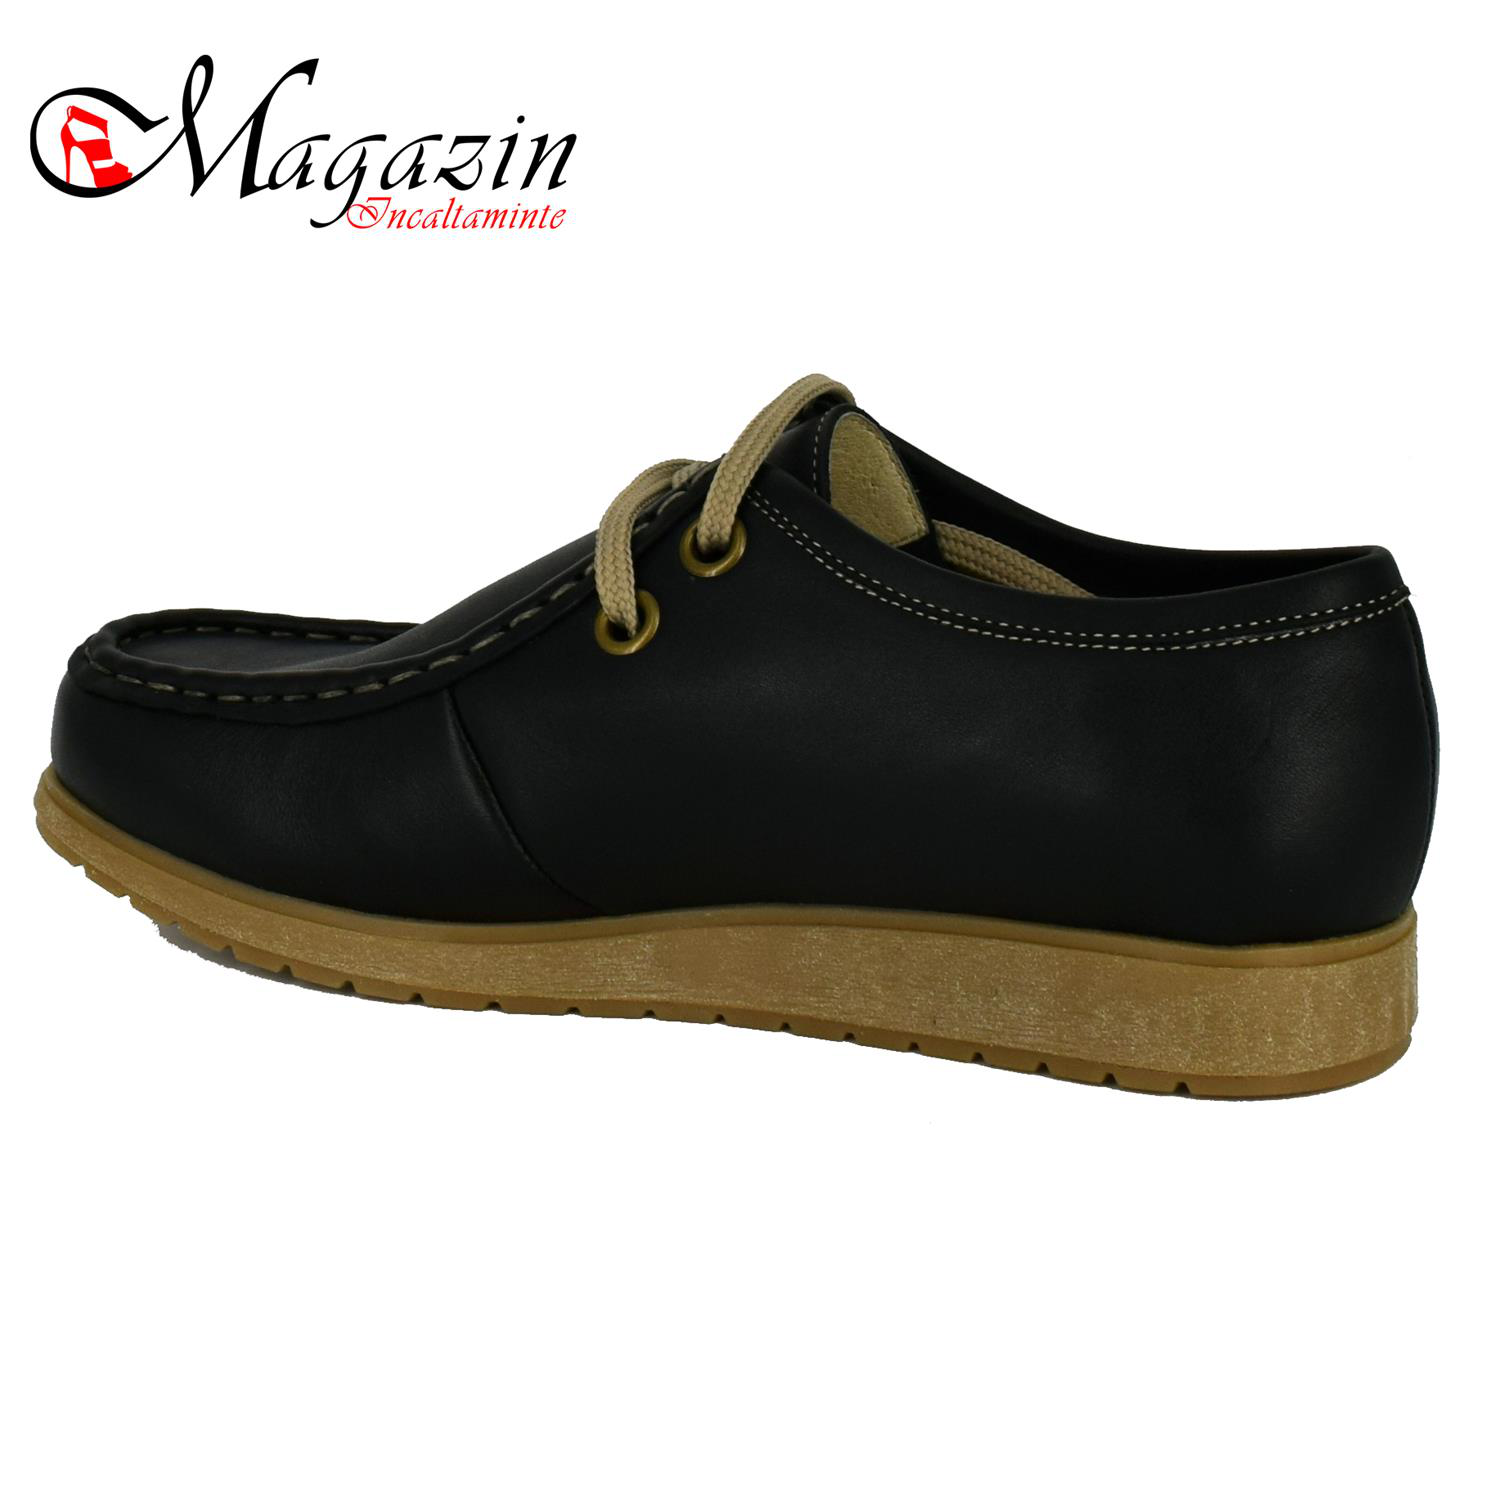 Pantofi Dama Piele Naturala - Prego - 101 Negru